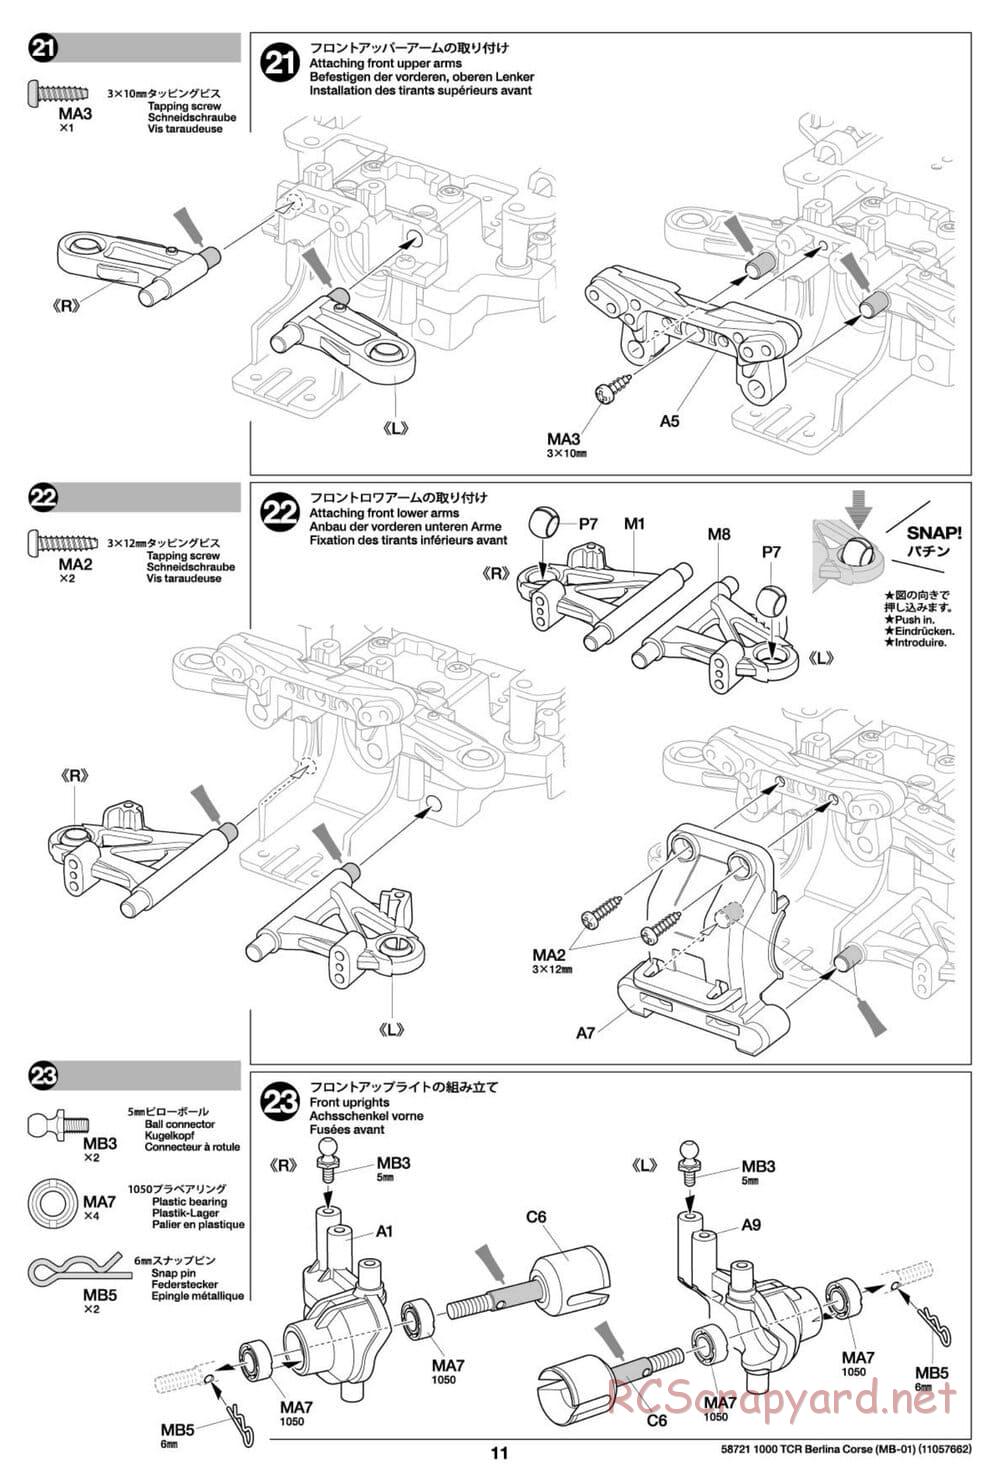 Tamiya - Fiat Abarth 1000 TCR Berlina Corsa - MB-01 Chassis - Manual - Page 11